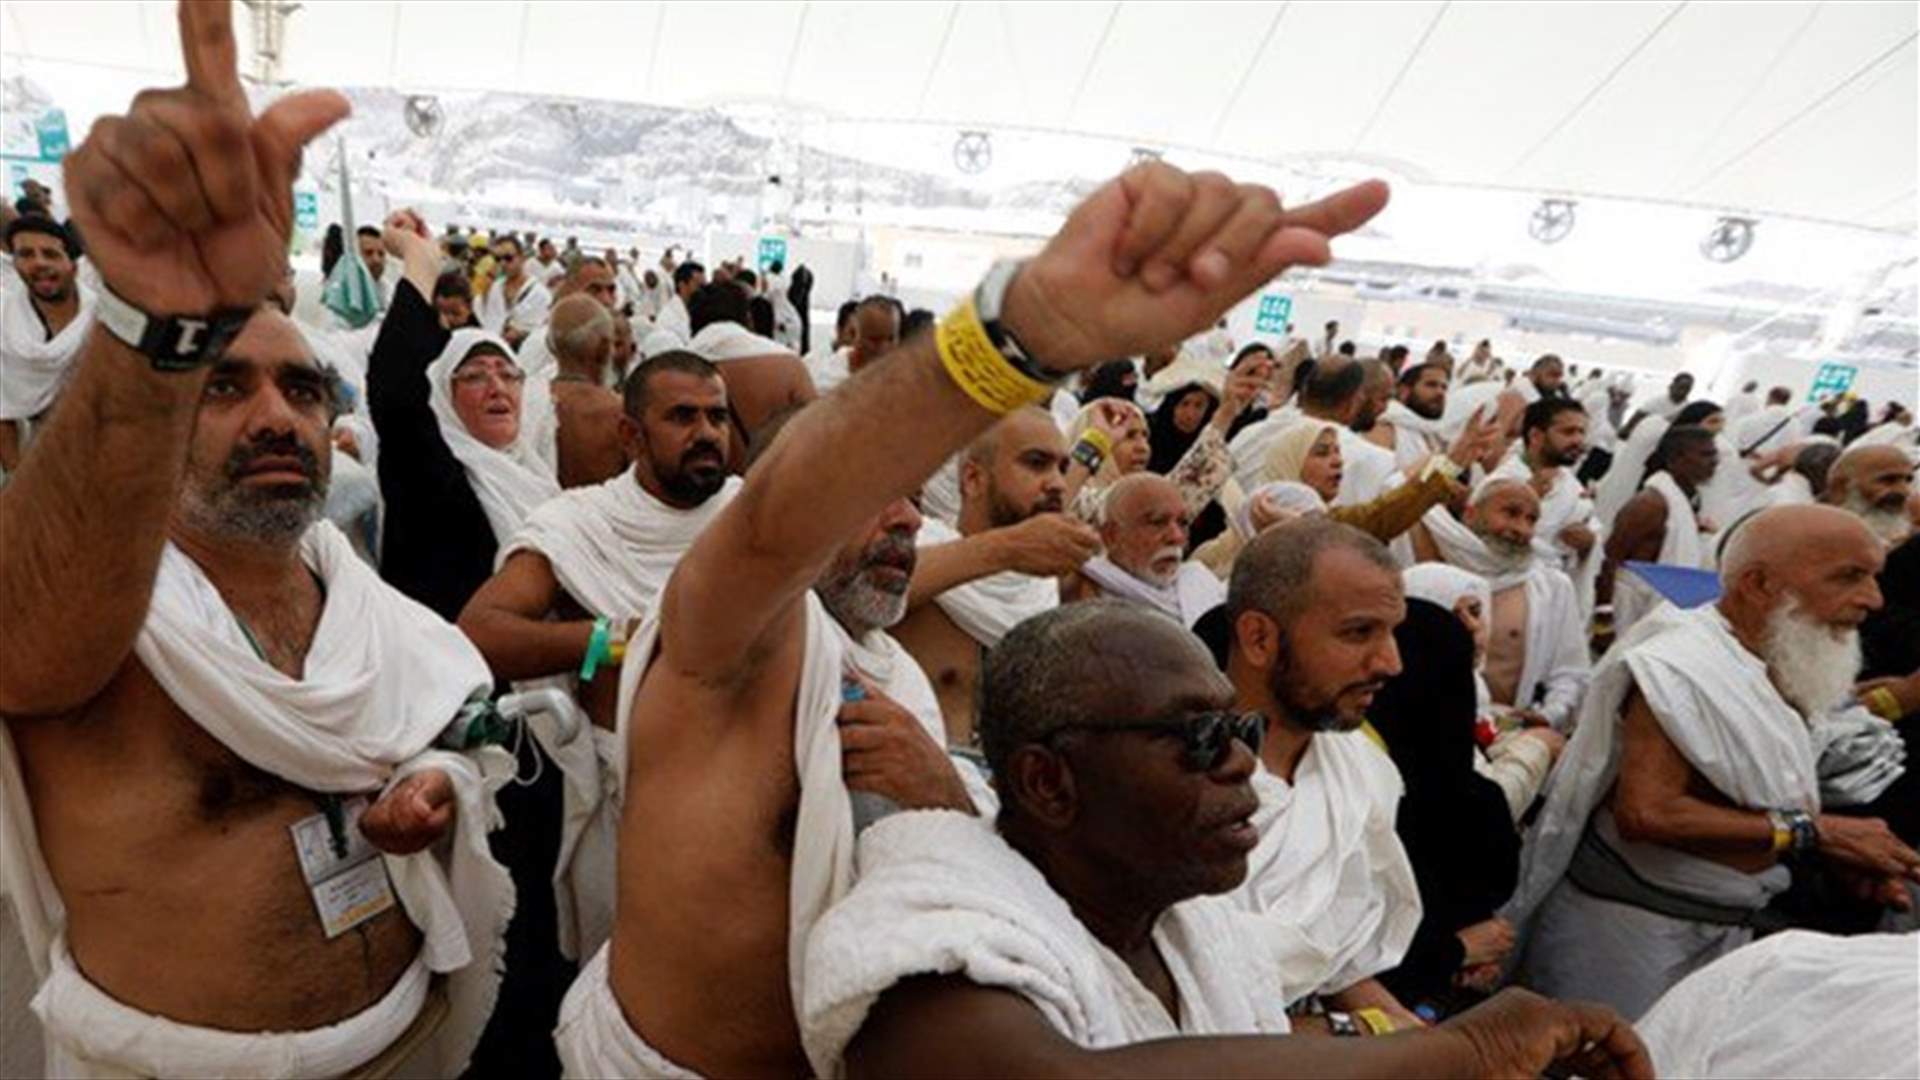 Muslims at haj converge on Jamarat for ritual stoning of the devil